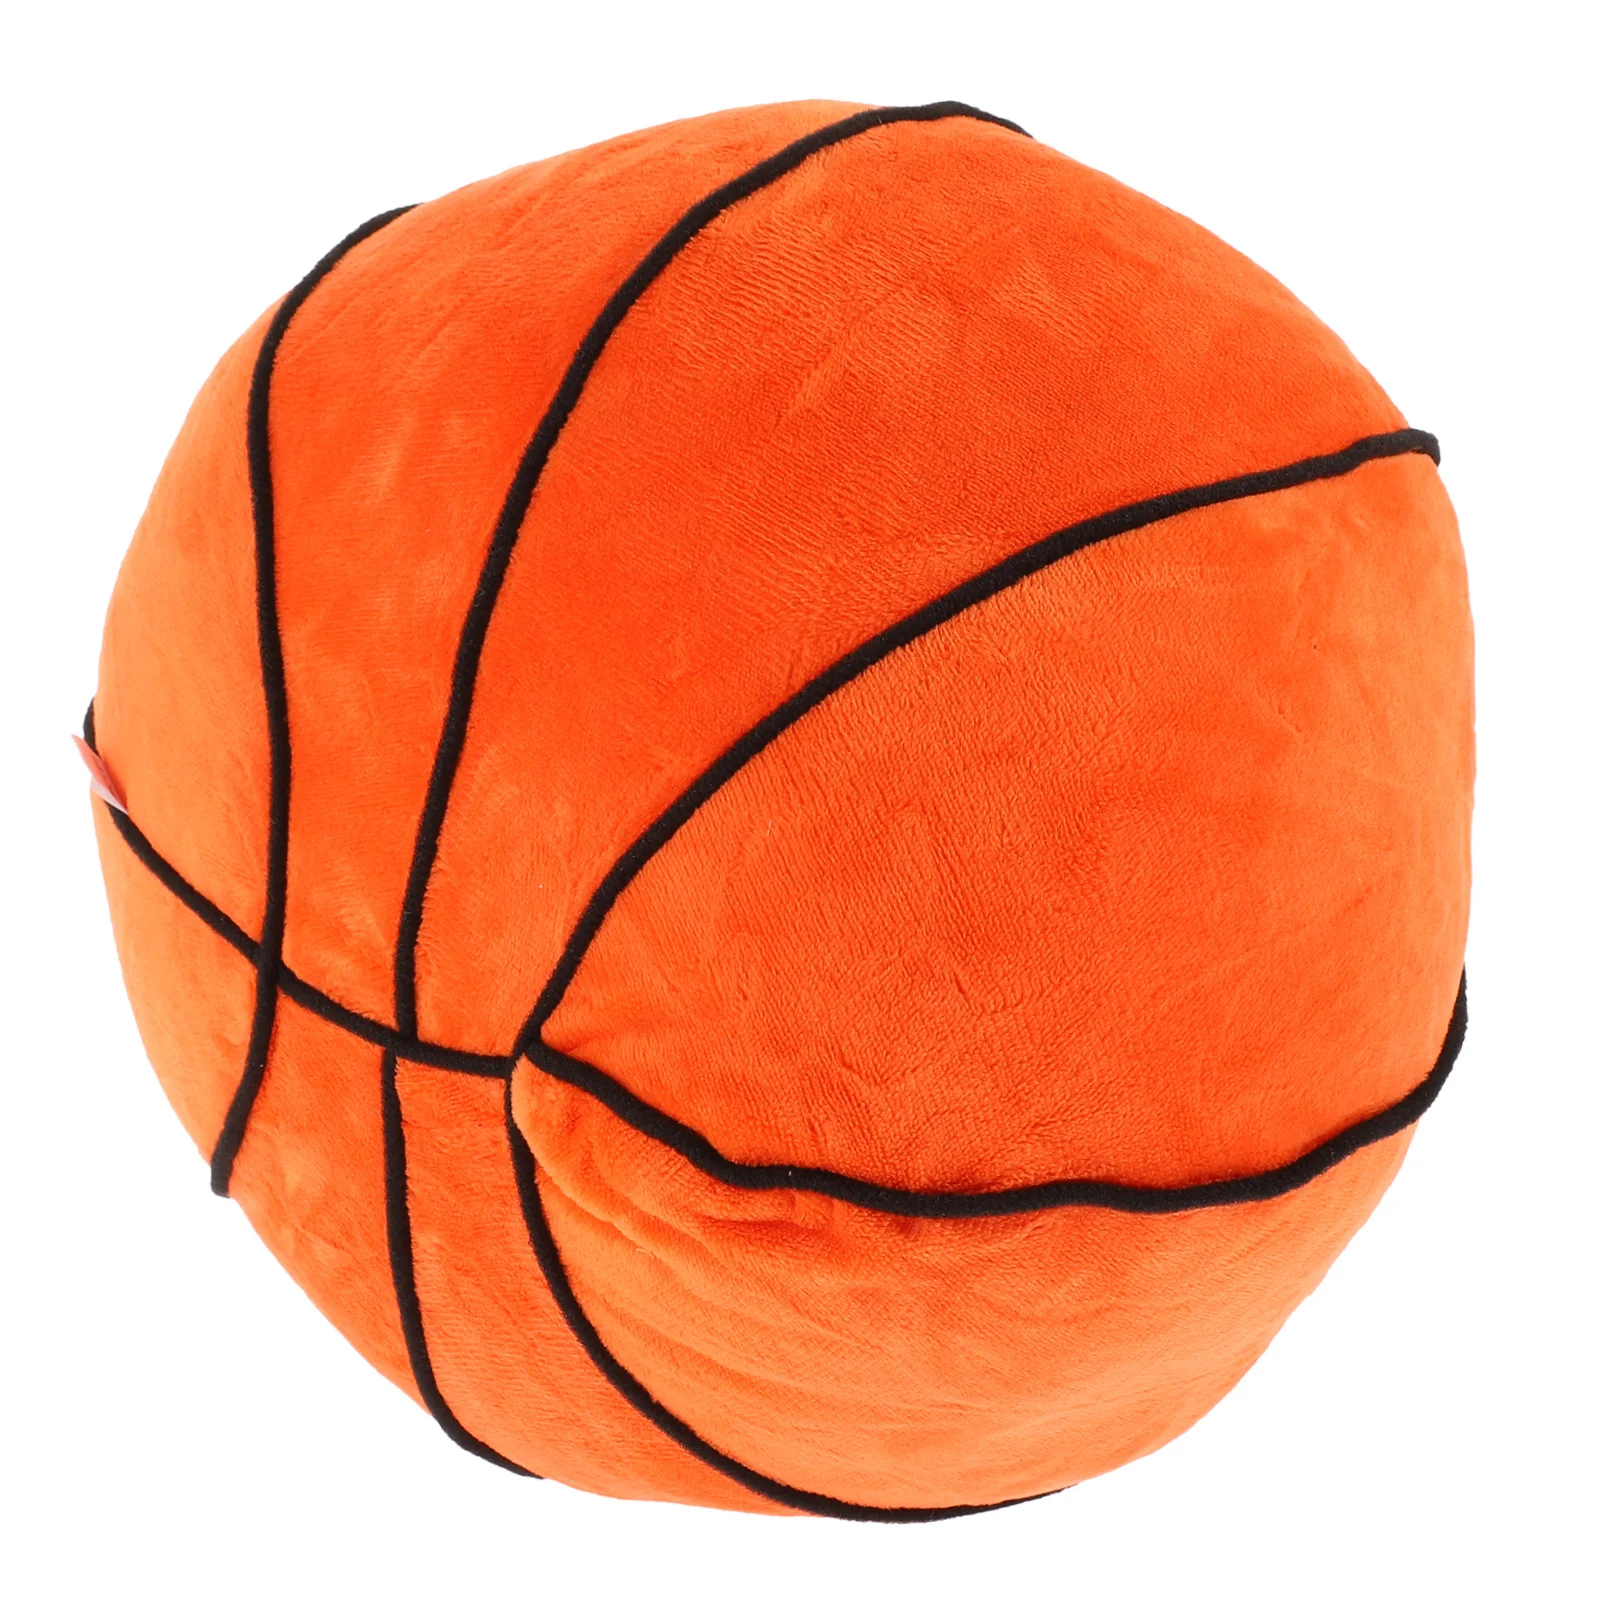 Basketball Pillow Toys For Baby Plush Plush Plush Fluffy Stuffed Basketball Throw Pillow